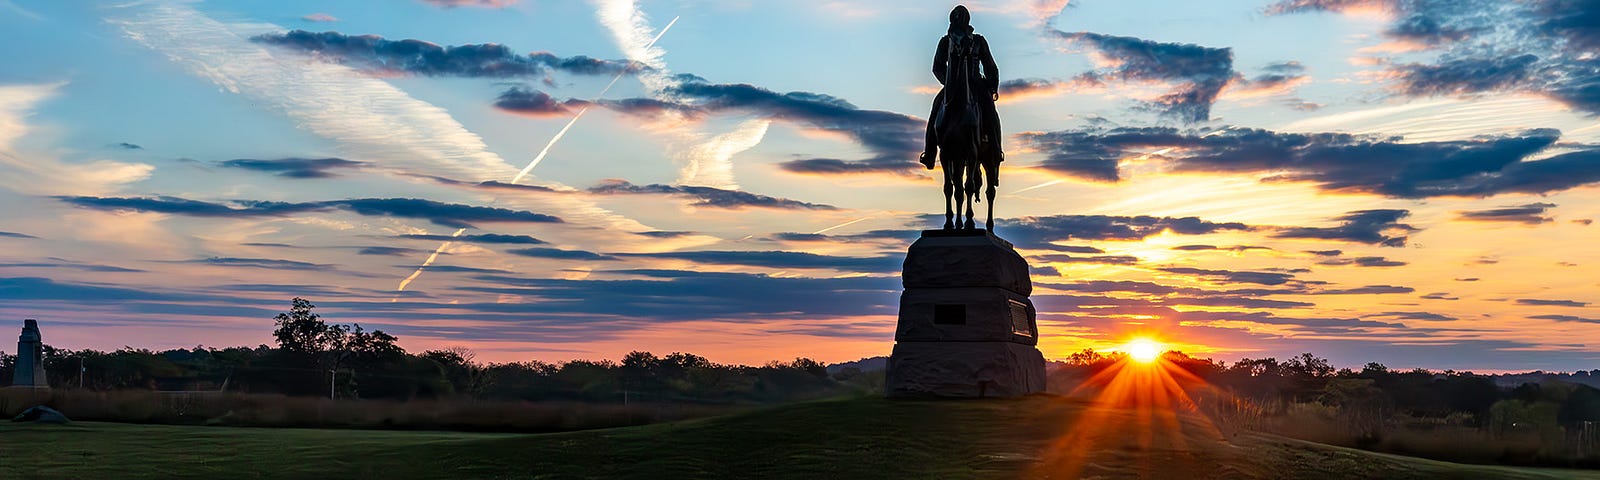 The sun rises over the Gettysburg battlefield.